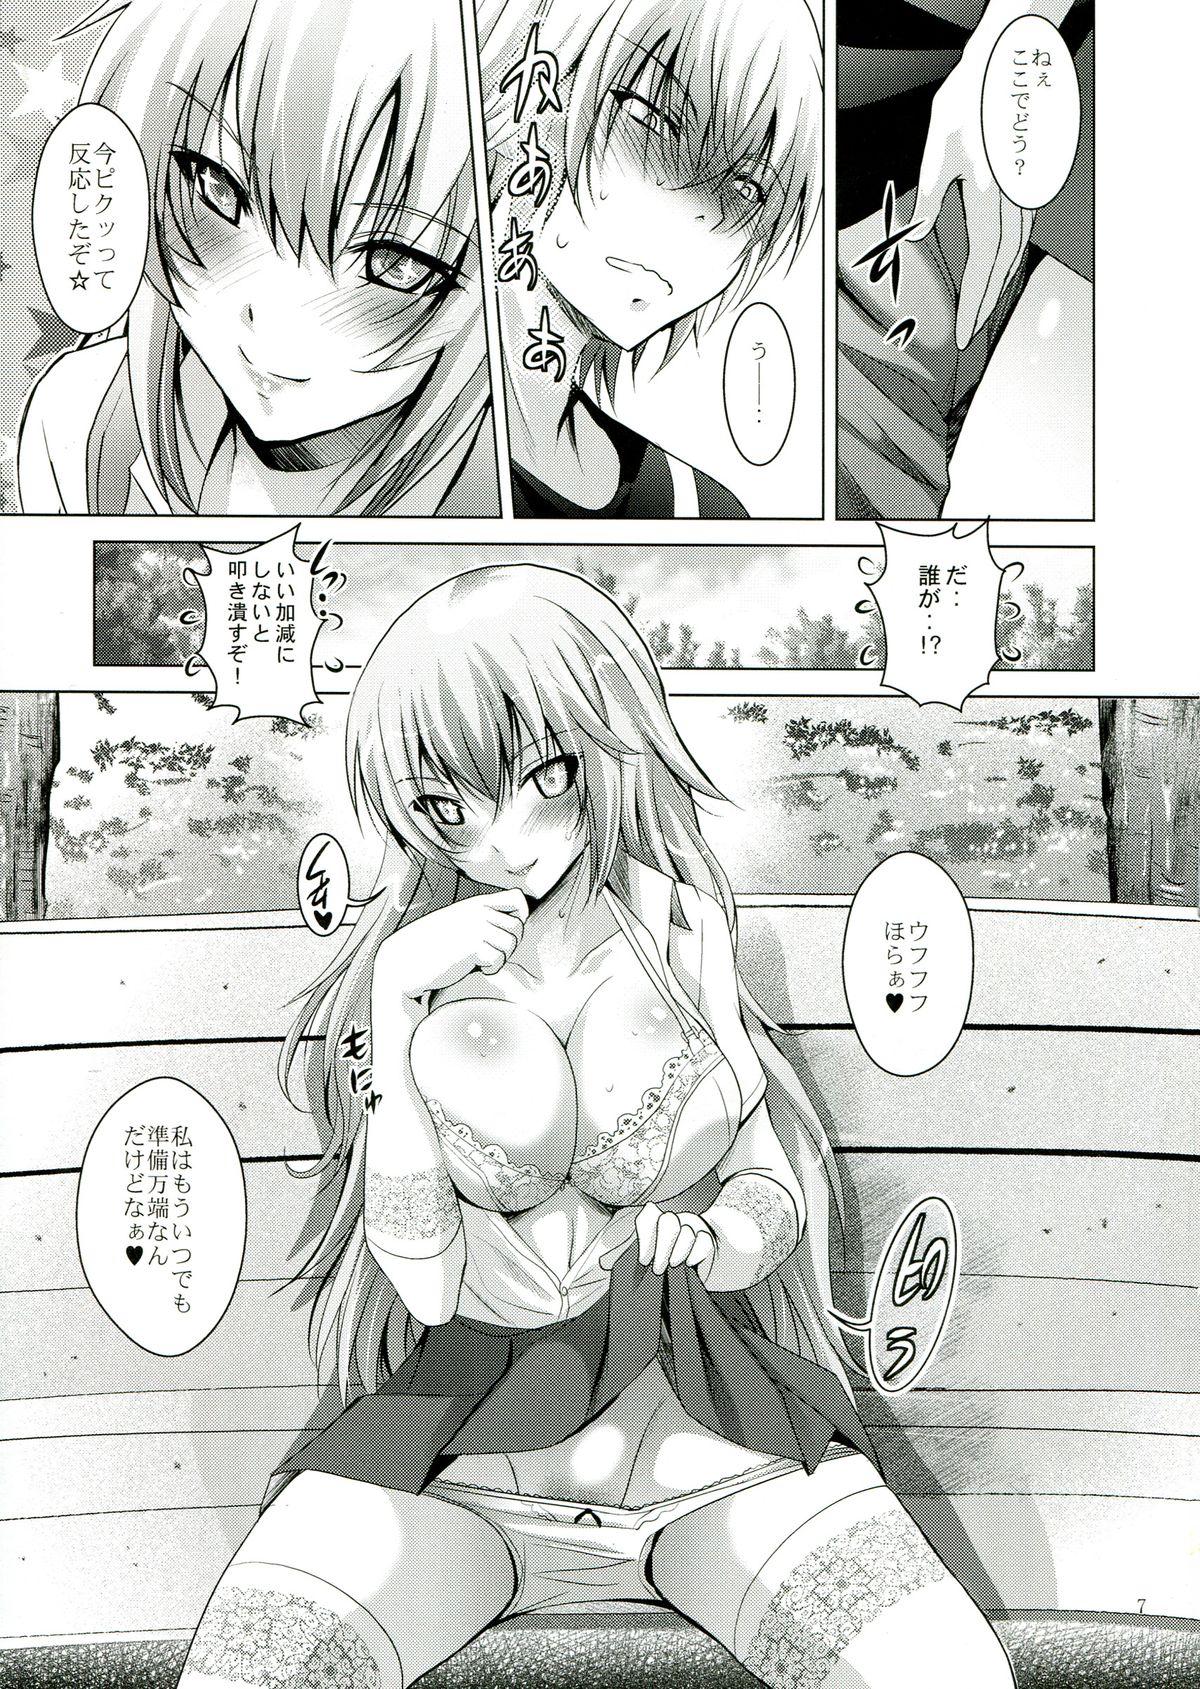 4some MOUSOU THEATER 42 - Toaru majutsu no index Horny Slut - Page 7